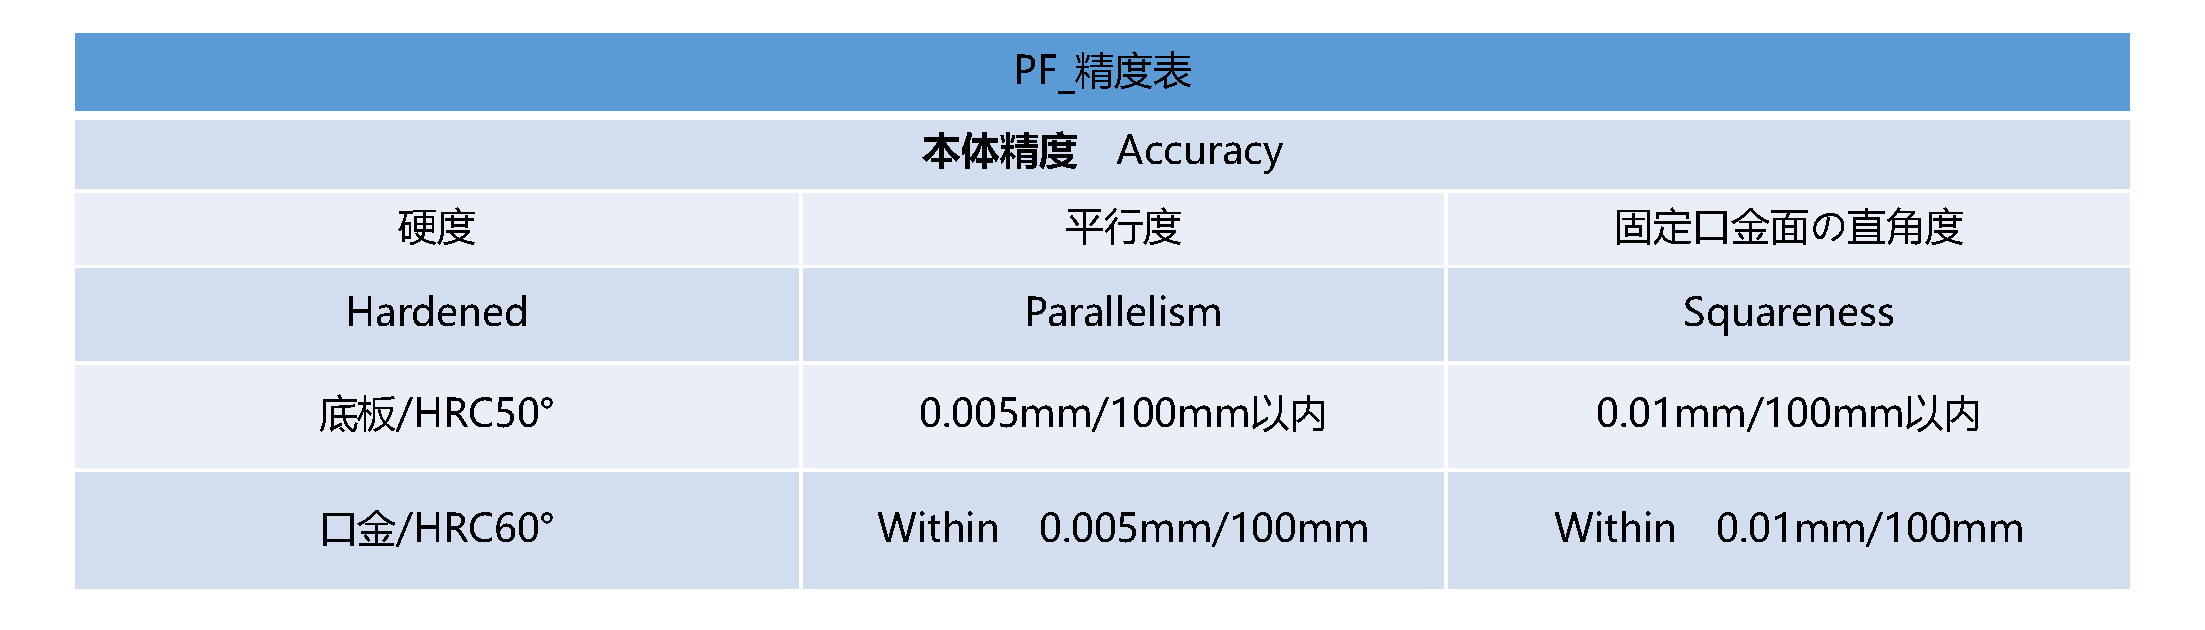 PF_精度表 - 中文.png